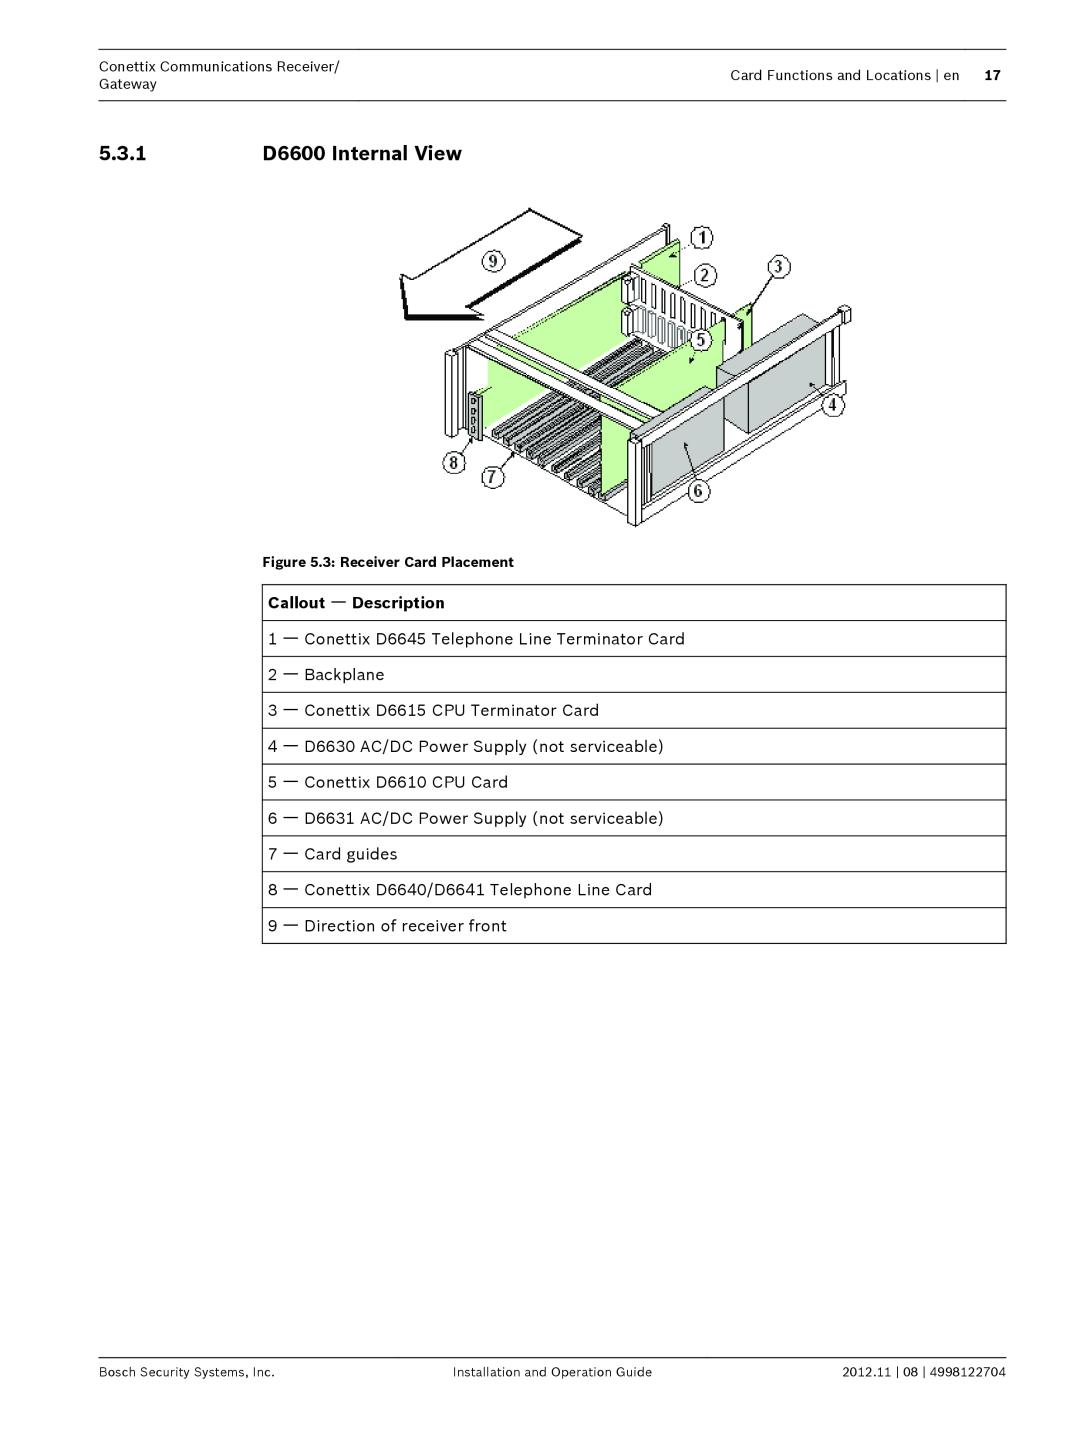 Bosch Appliances installation and operation guide 5.3.1, D6600 Internal View, Callout ᅳ Description 